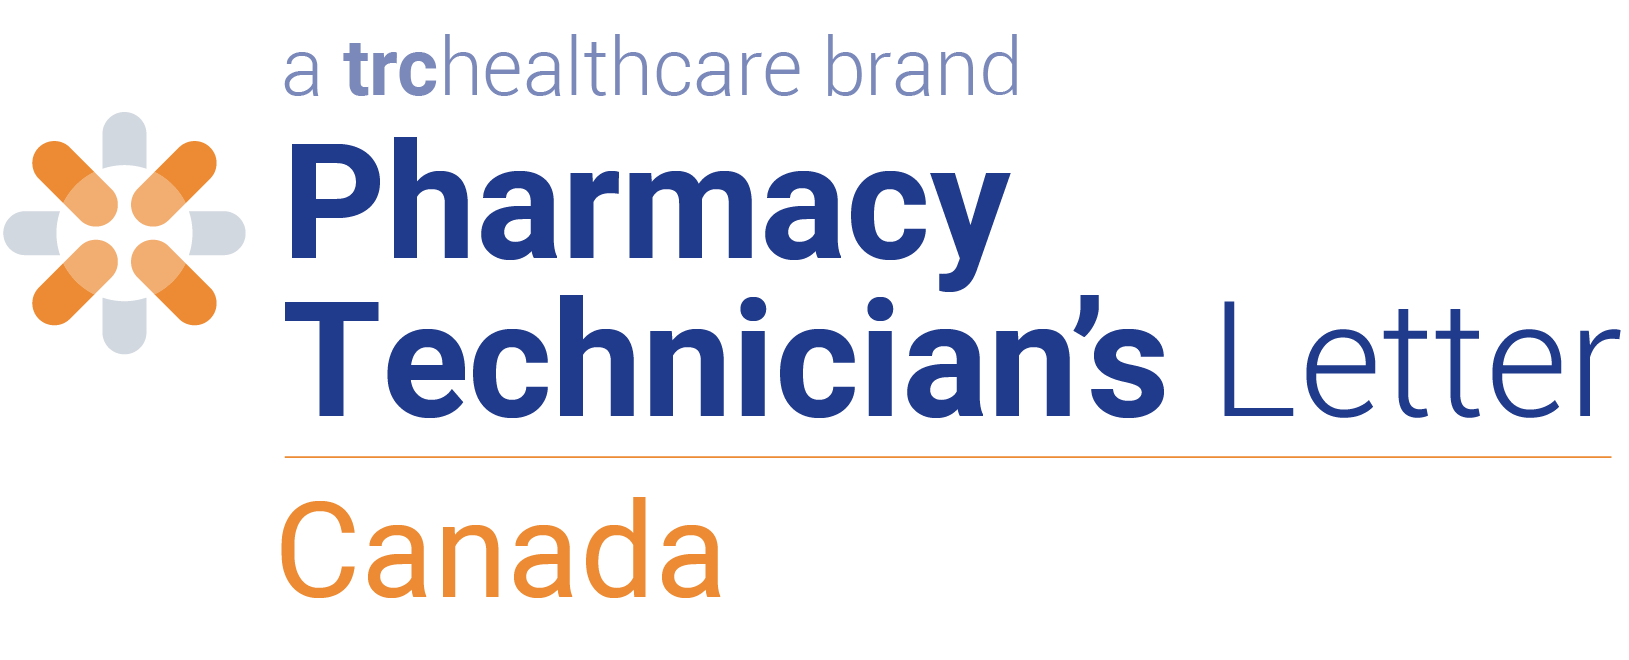 Pharmacy Technicians Letter Canada